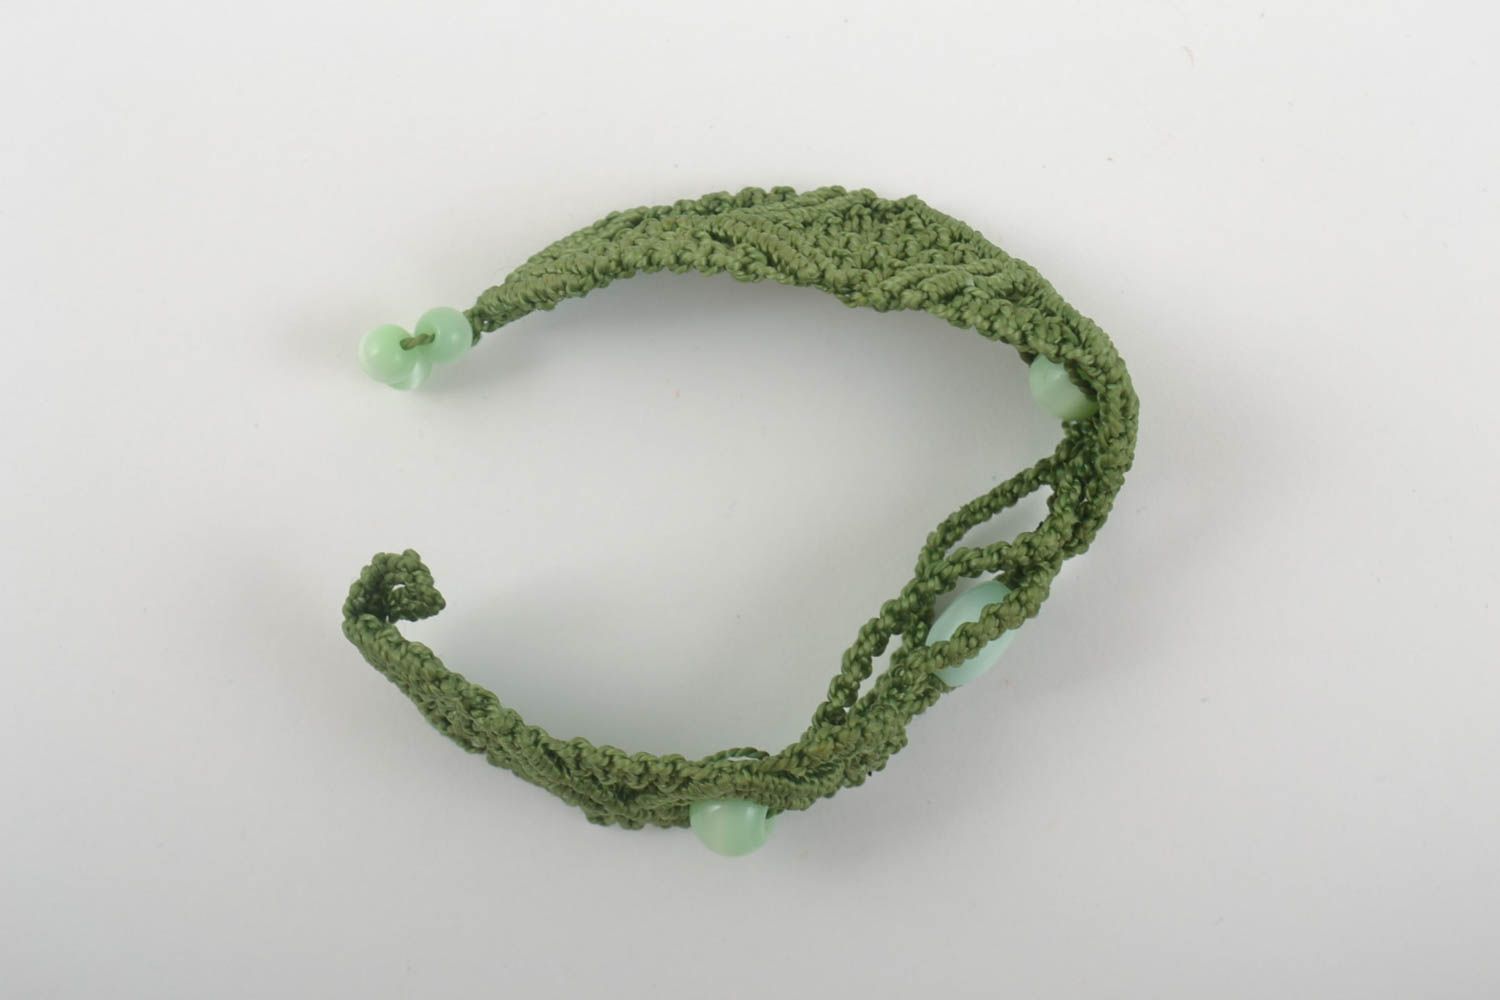 Unusual handmade woven wrist bracelet thread bracelet textile jewelry designs photo 3